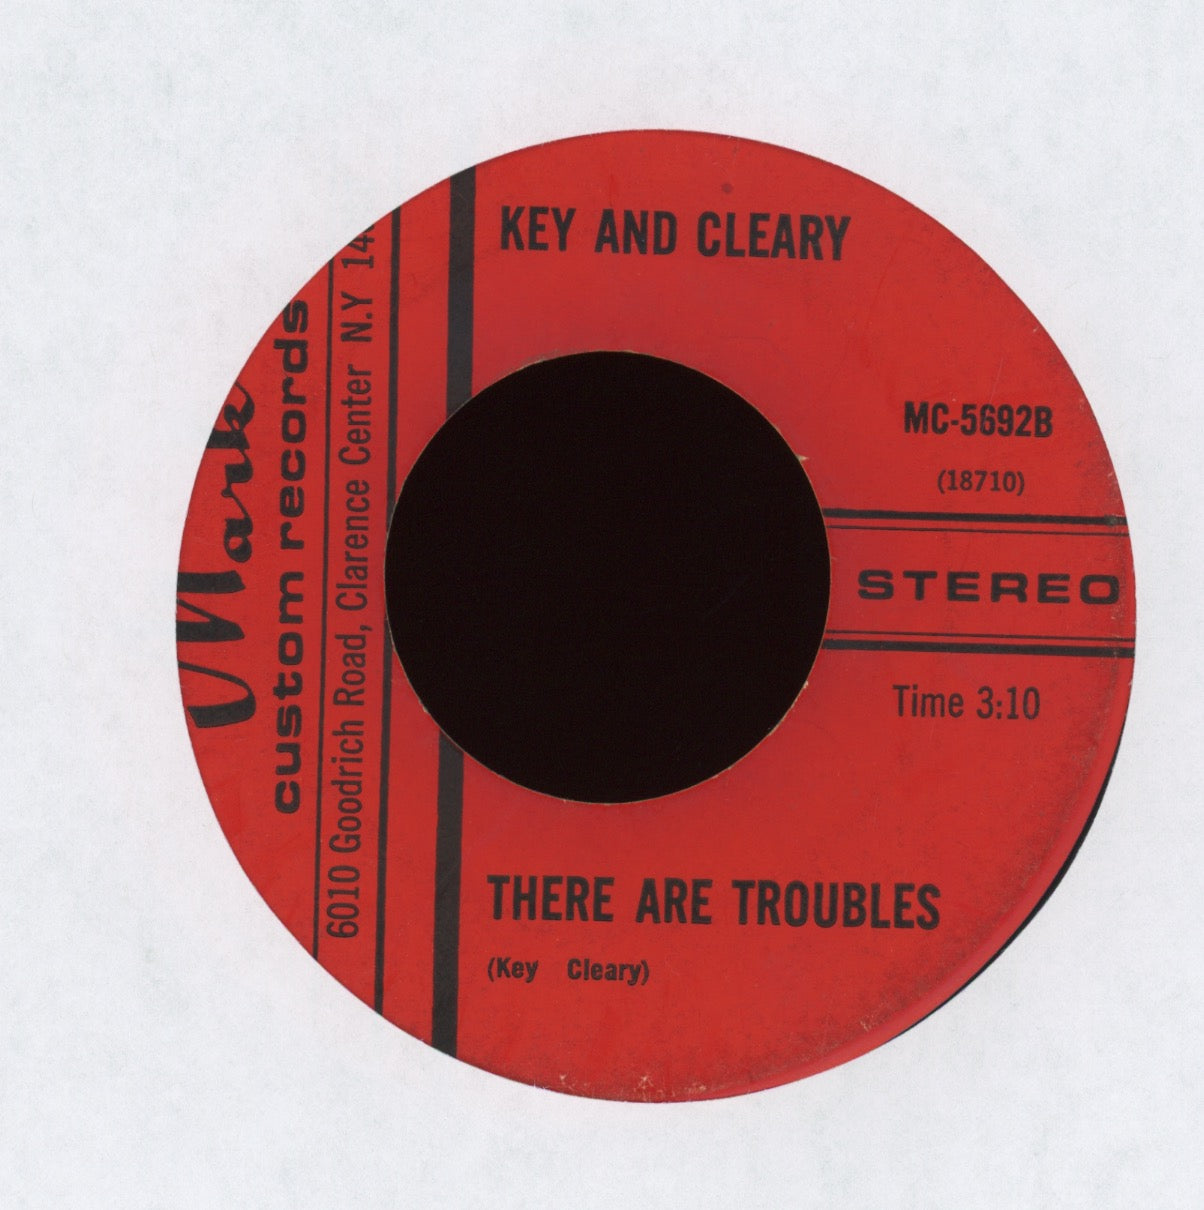 Key And Cleary - A Man on Mark Custom Funk 45